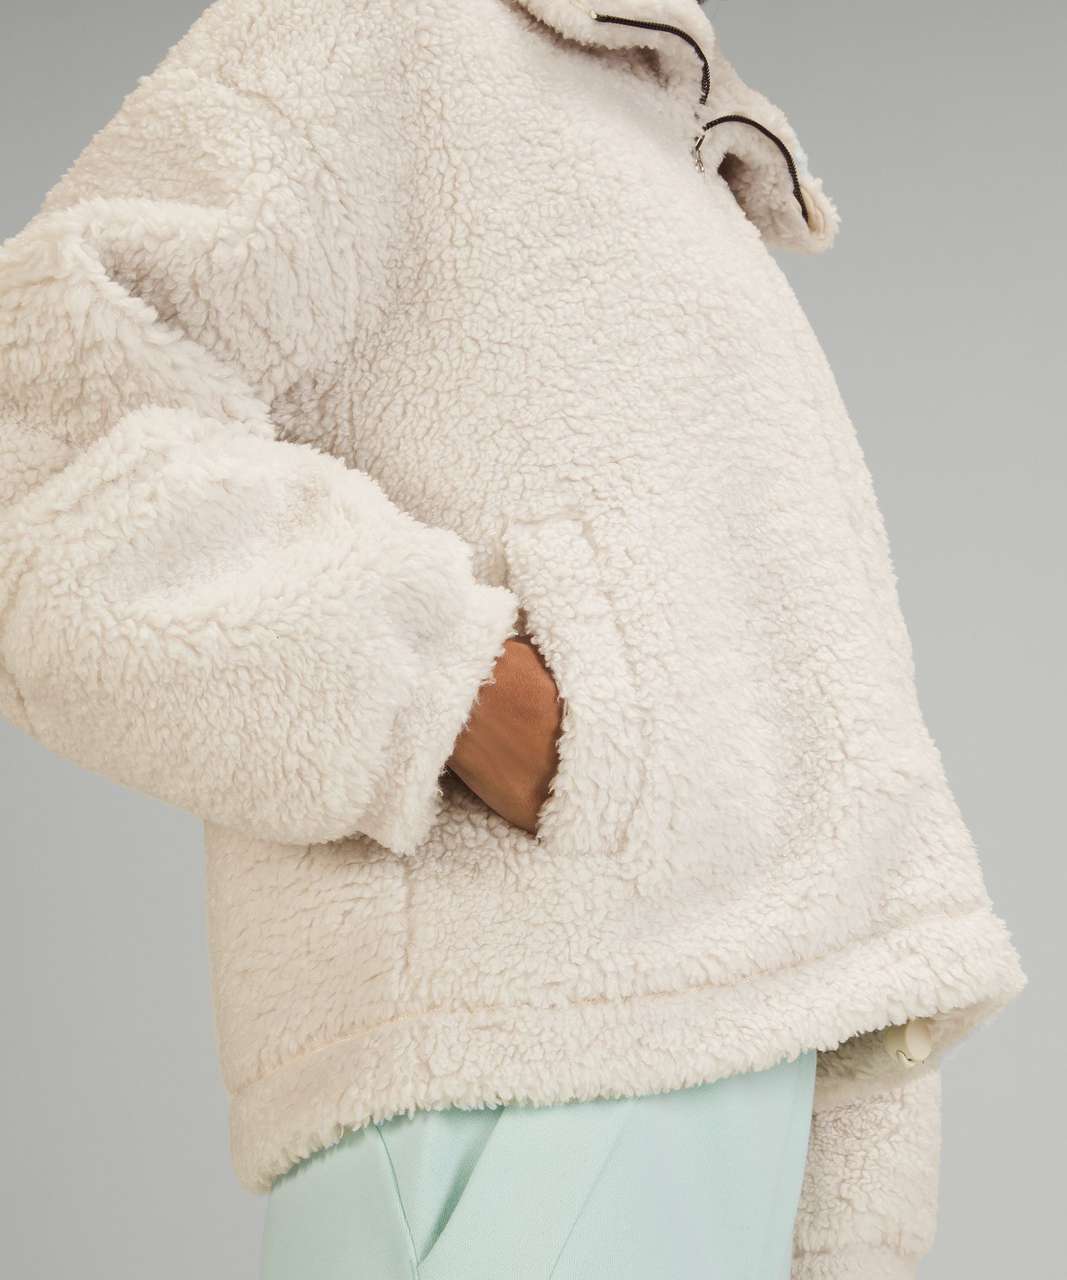 Reversible Fleece Jacket (Sherpa) in White Opal! Review in comments 🙂 : r/ lululemon